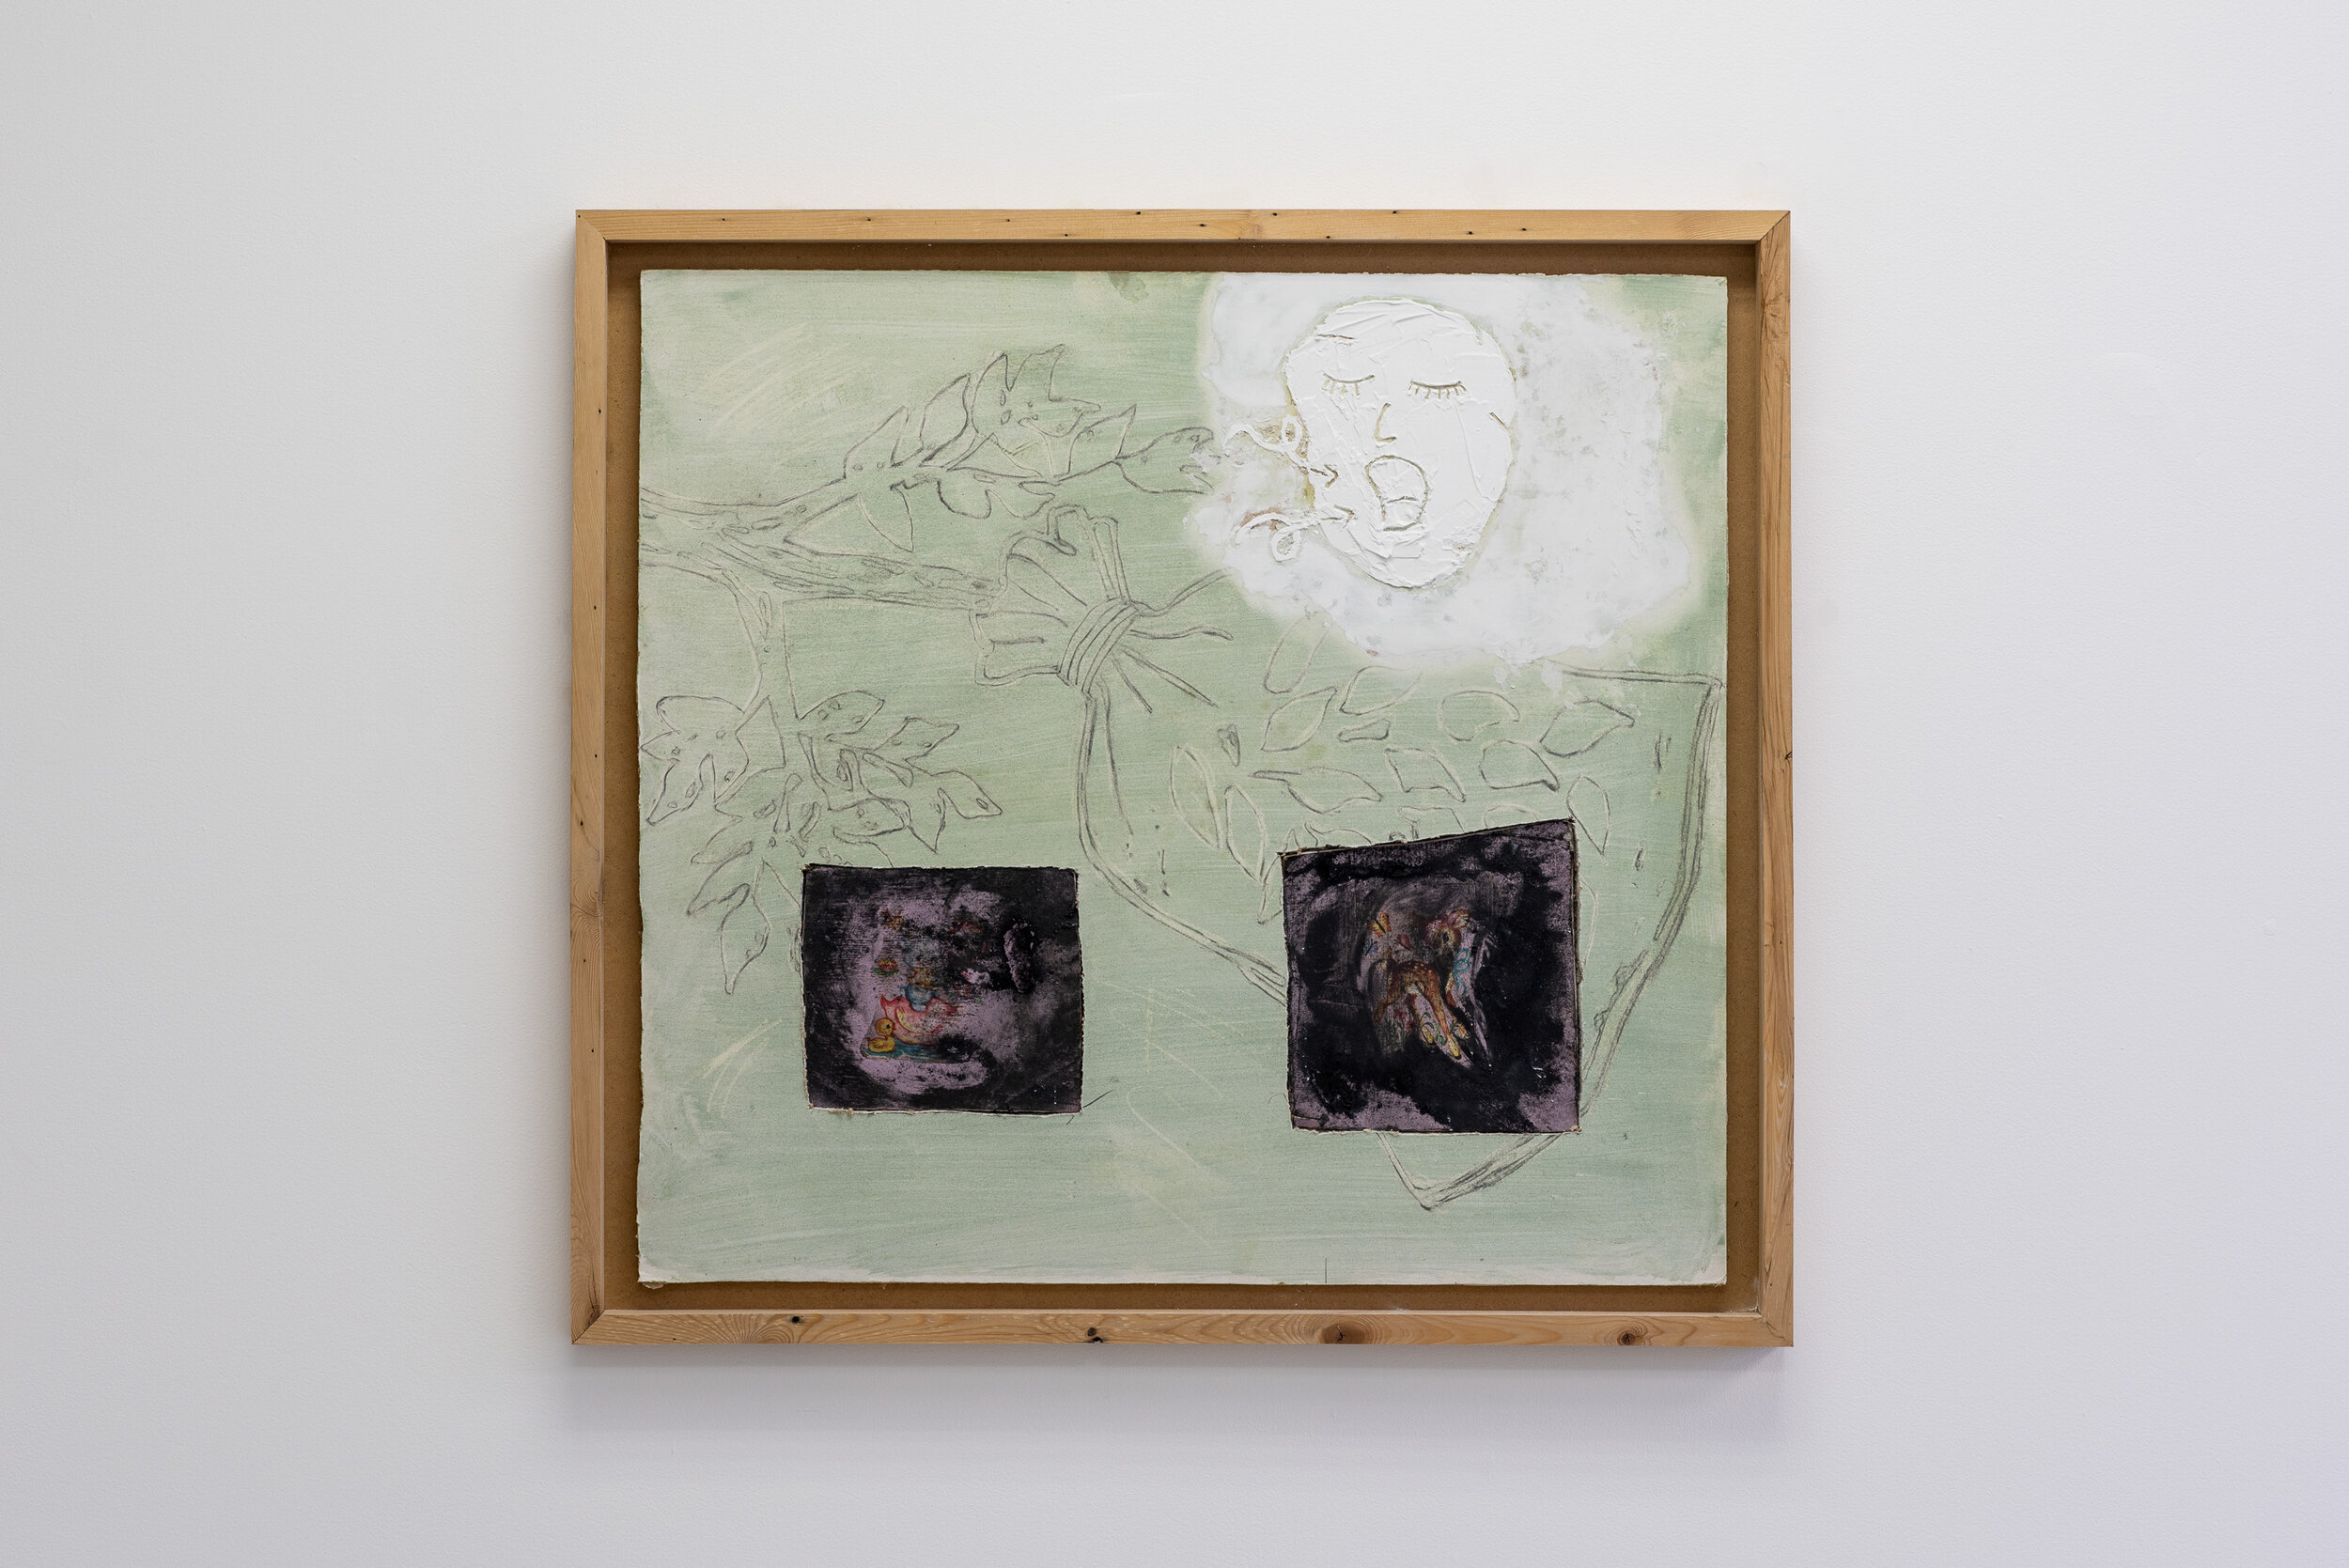  Craig Spence, ​ De Ira,  m​ ixed media on sheetrock and artist-made wooden frame, 2019  